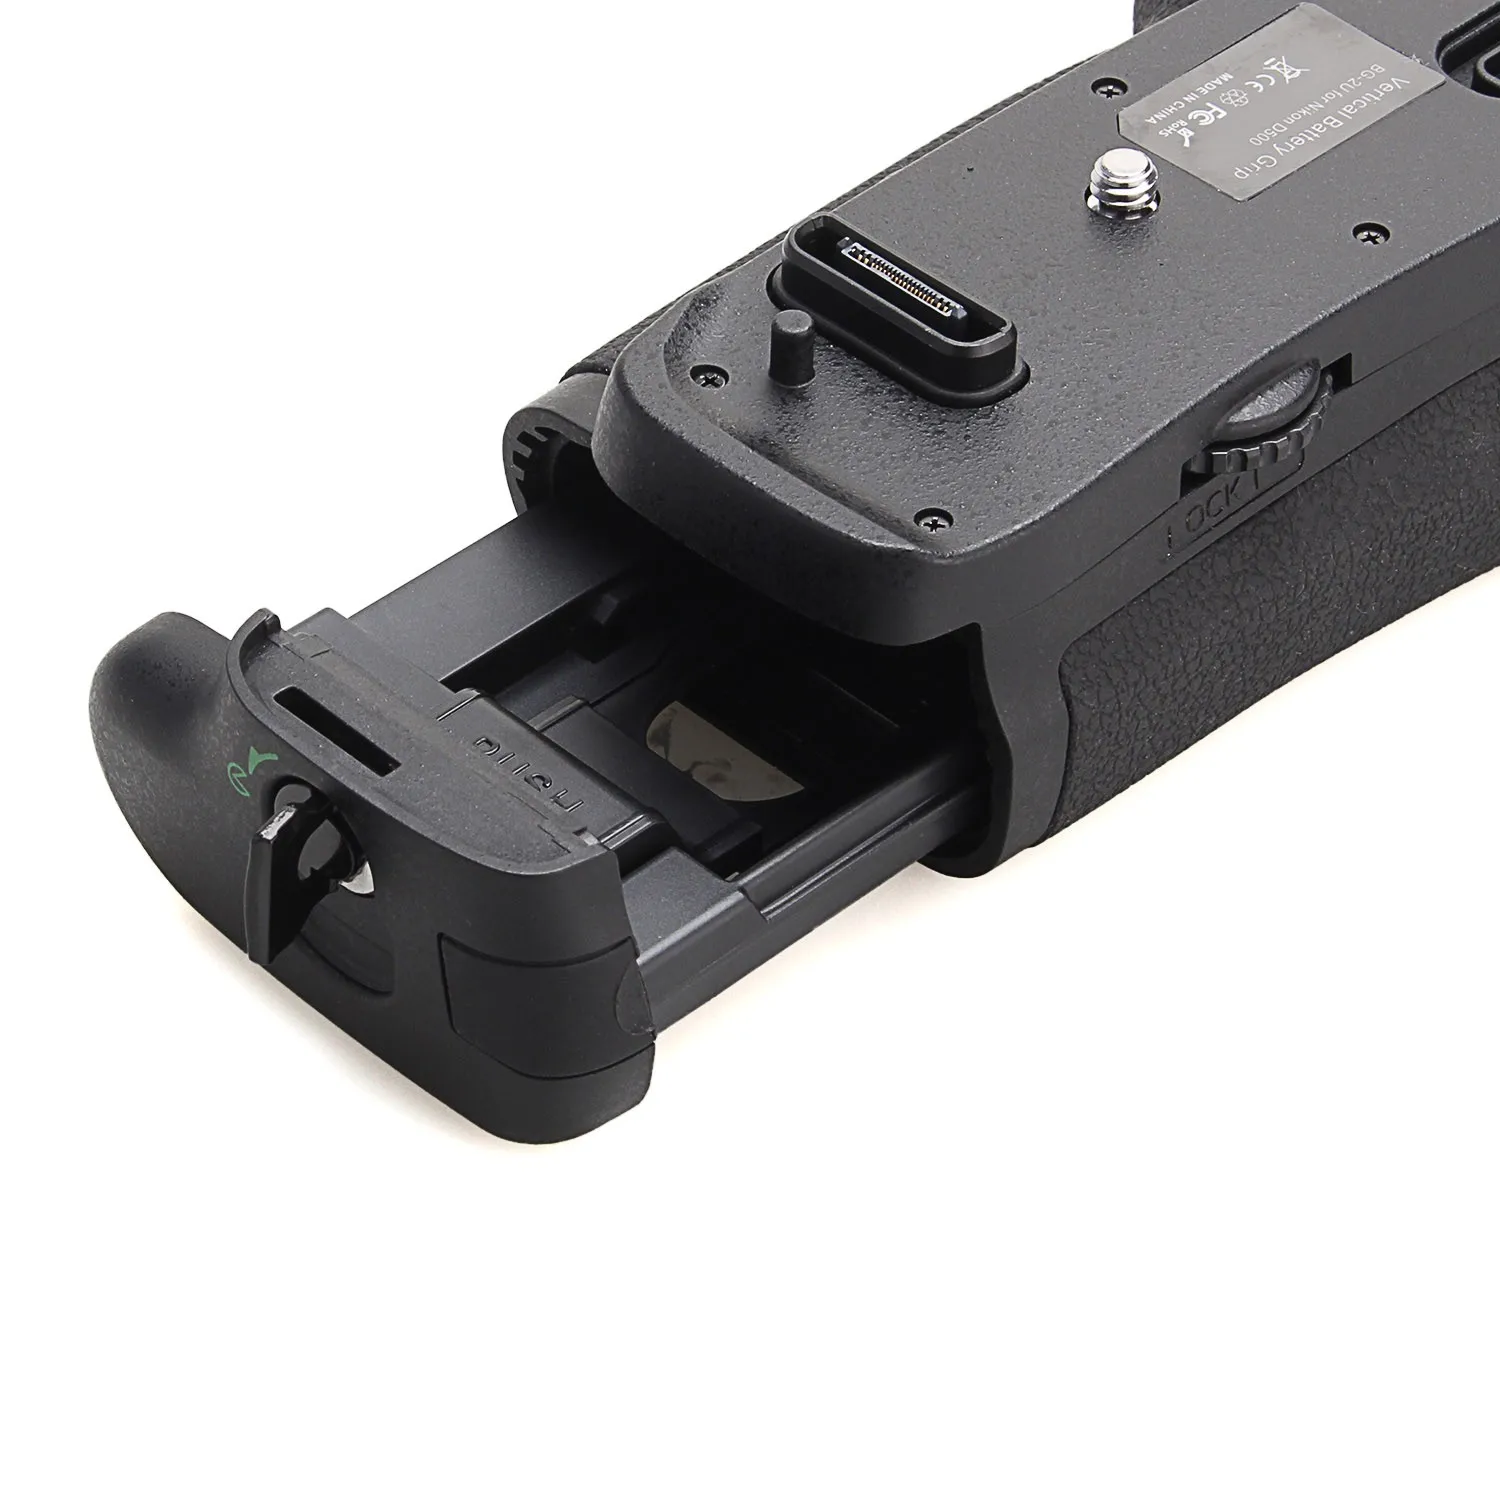 MB-D17 сменная Батарейная ручка для цифровых зеркальных камер Nikon D500 работает с EN-EL15, как MK-D500 VS Pixel Vertax D1